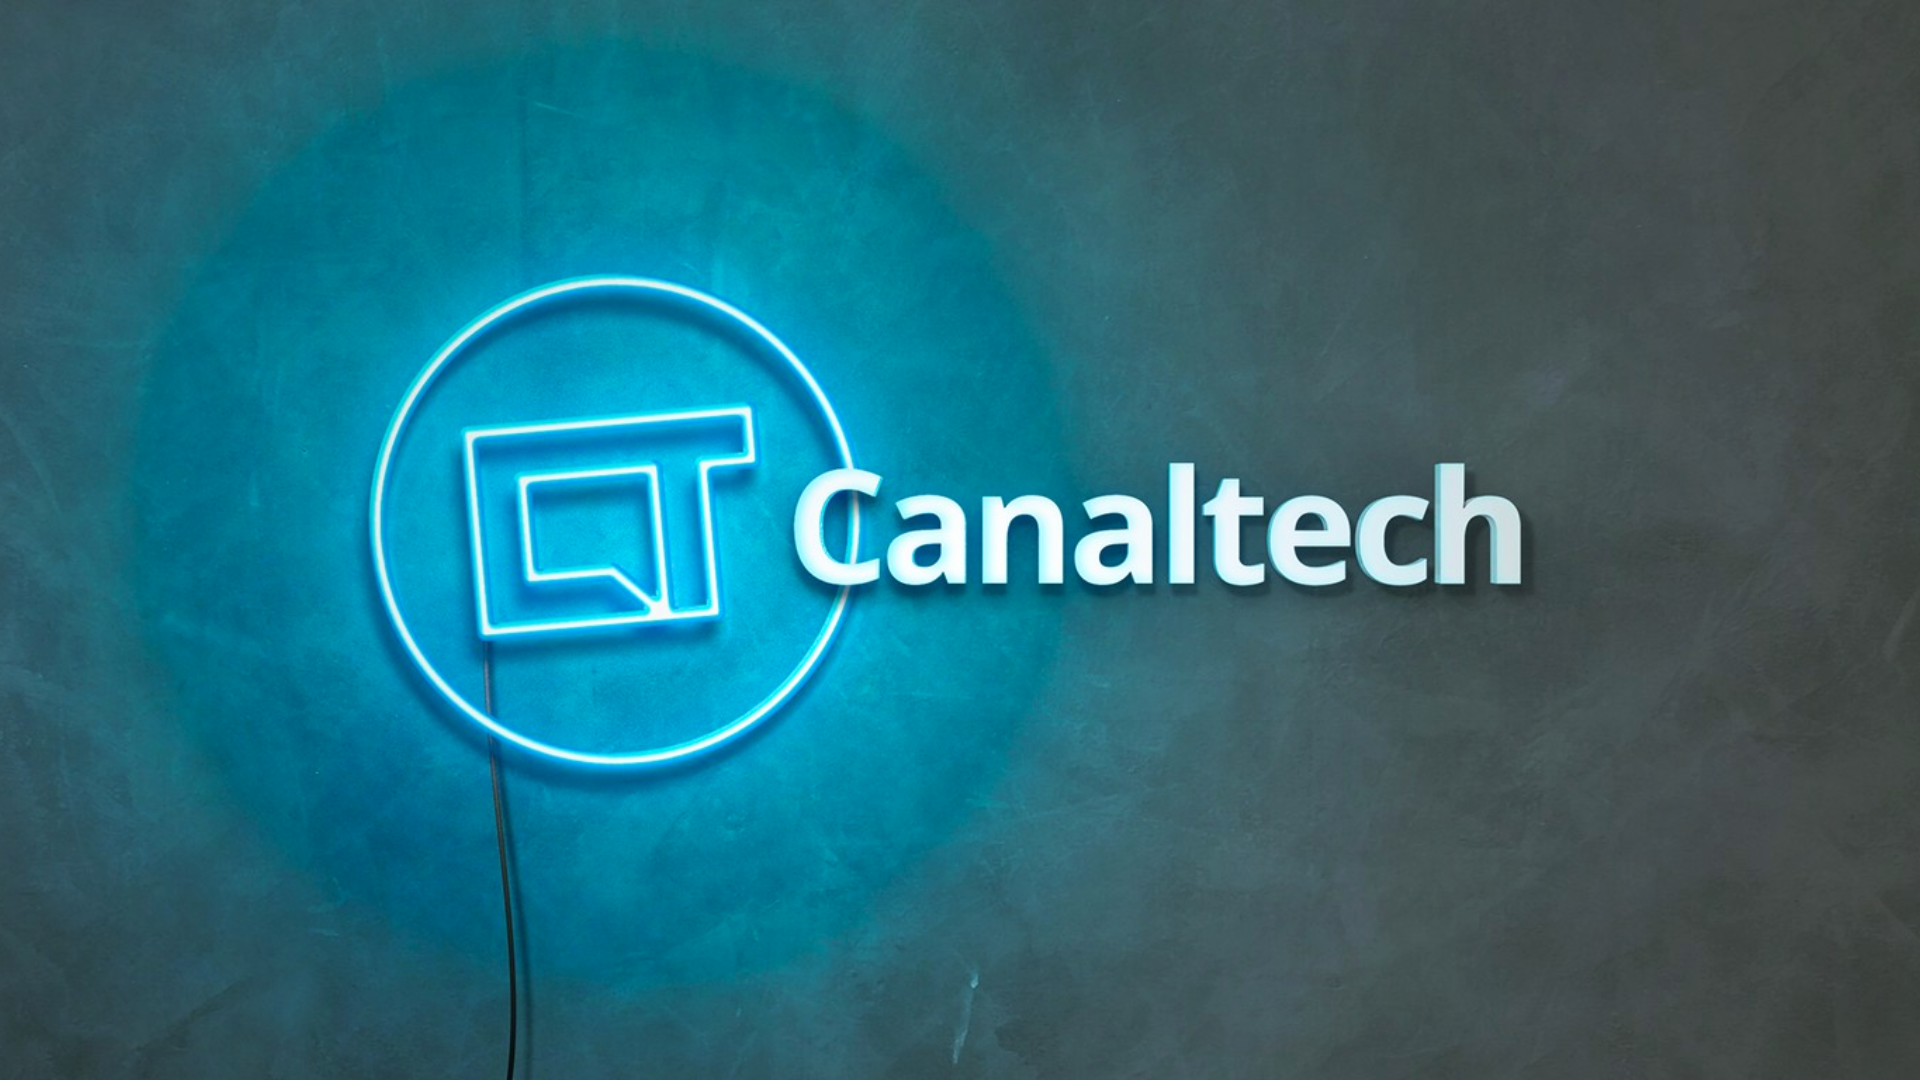 10 jogos brasileiros disponíveis para celulares - Canaltech